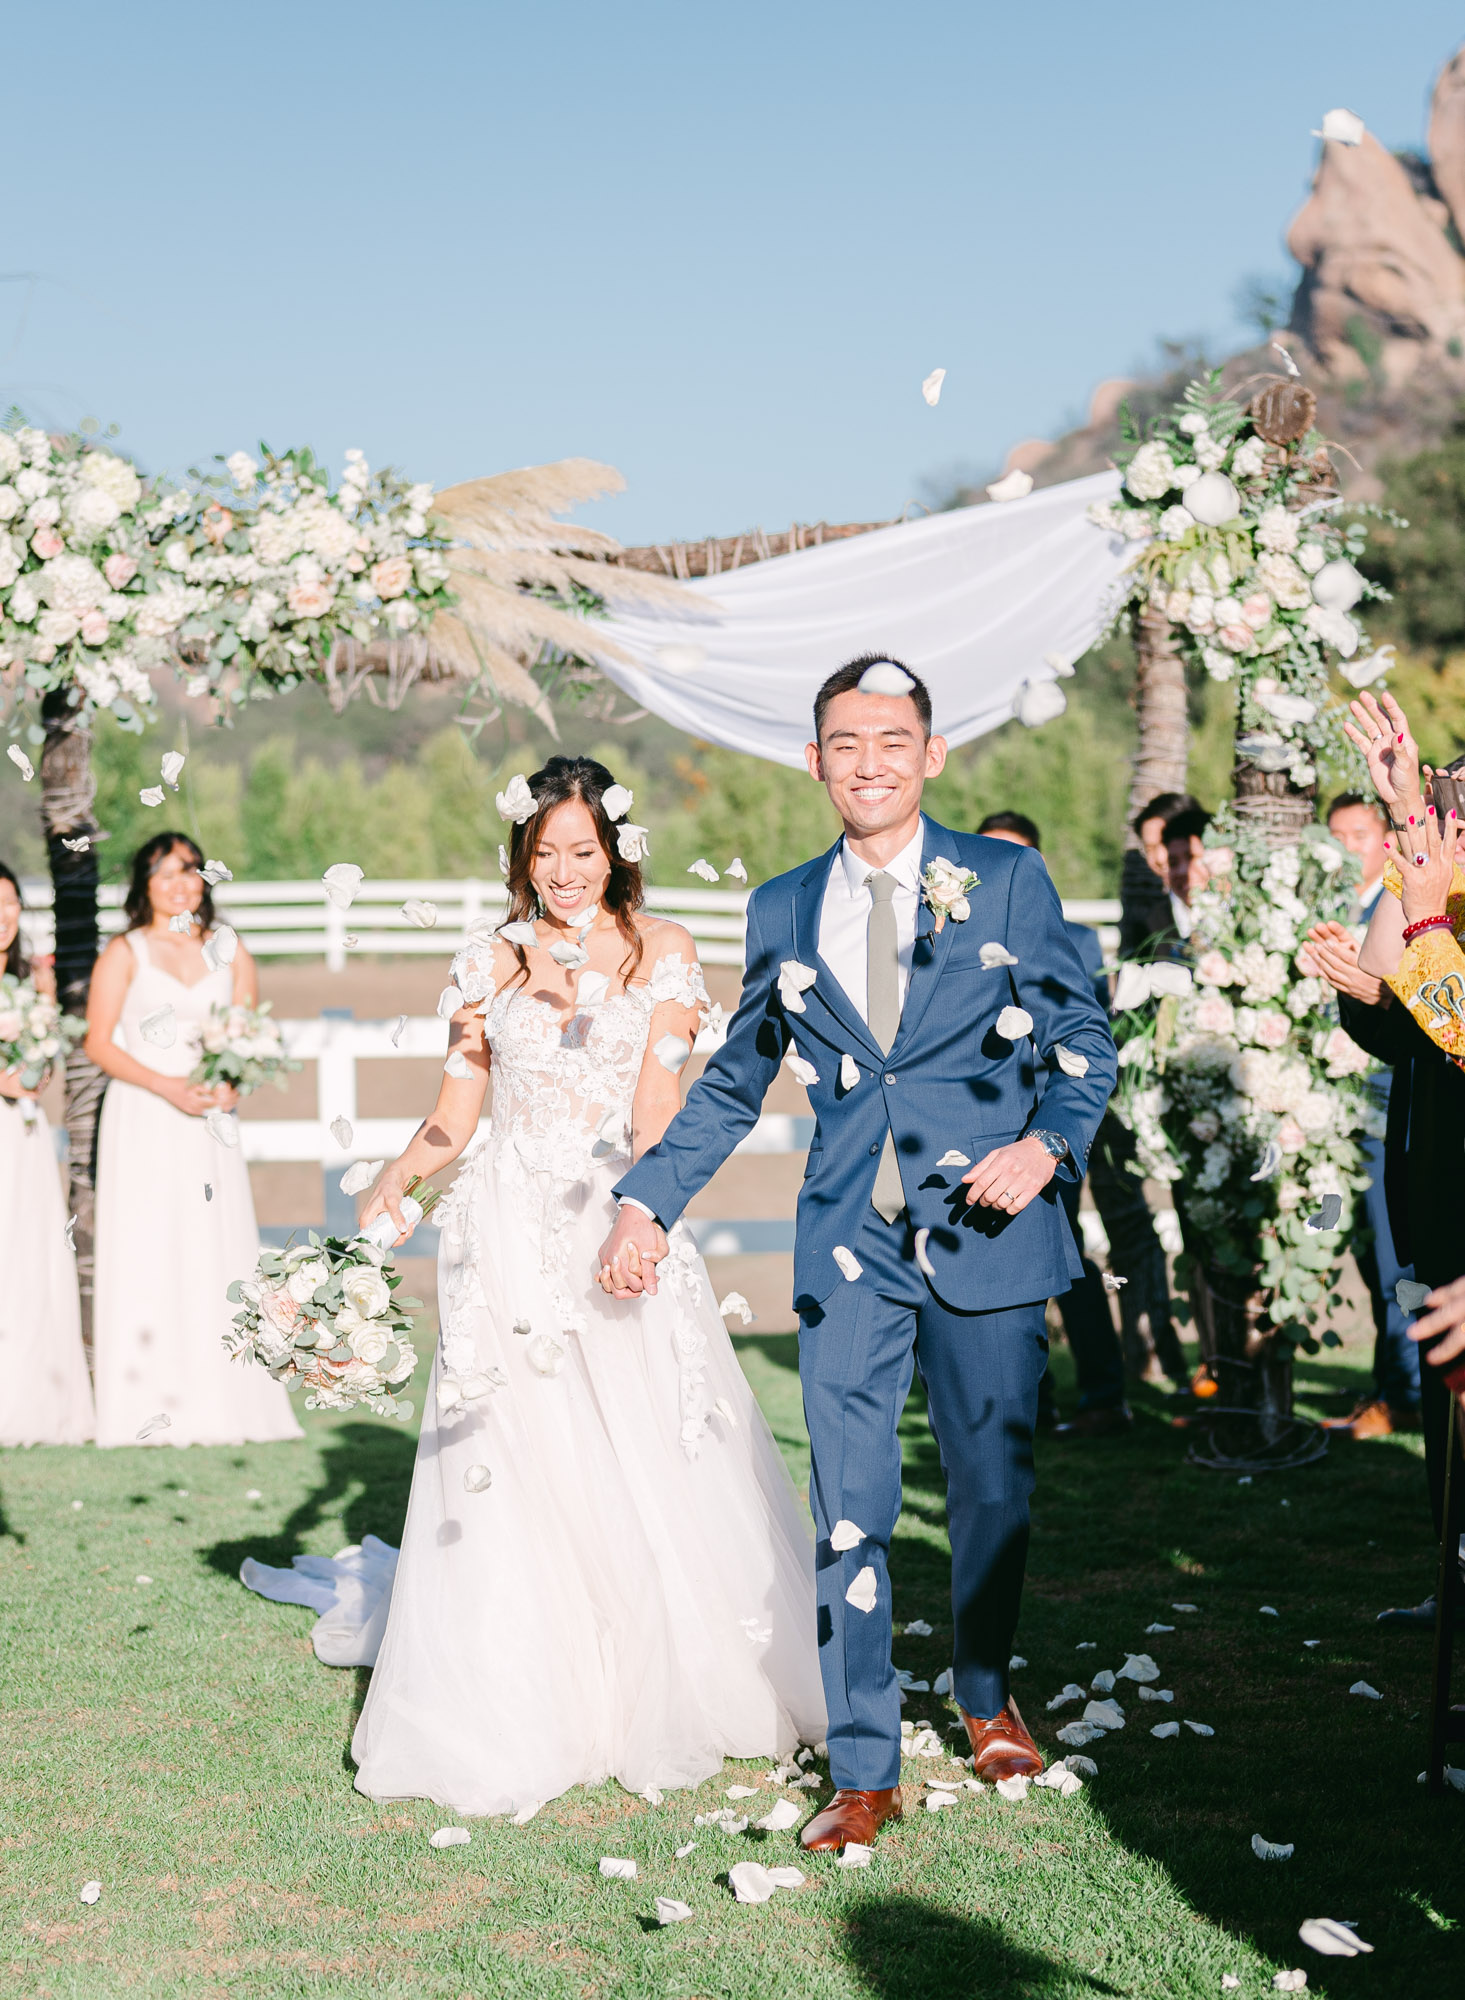 Ceremony at Saddlerock ranch wedding in malibu, california